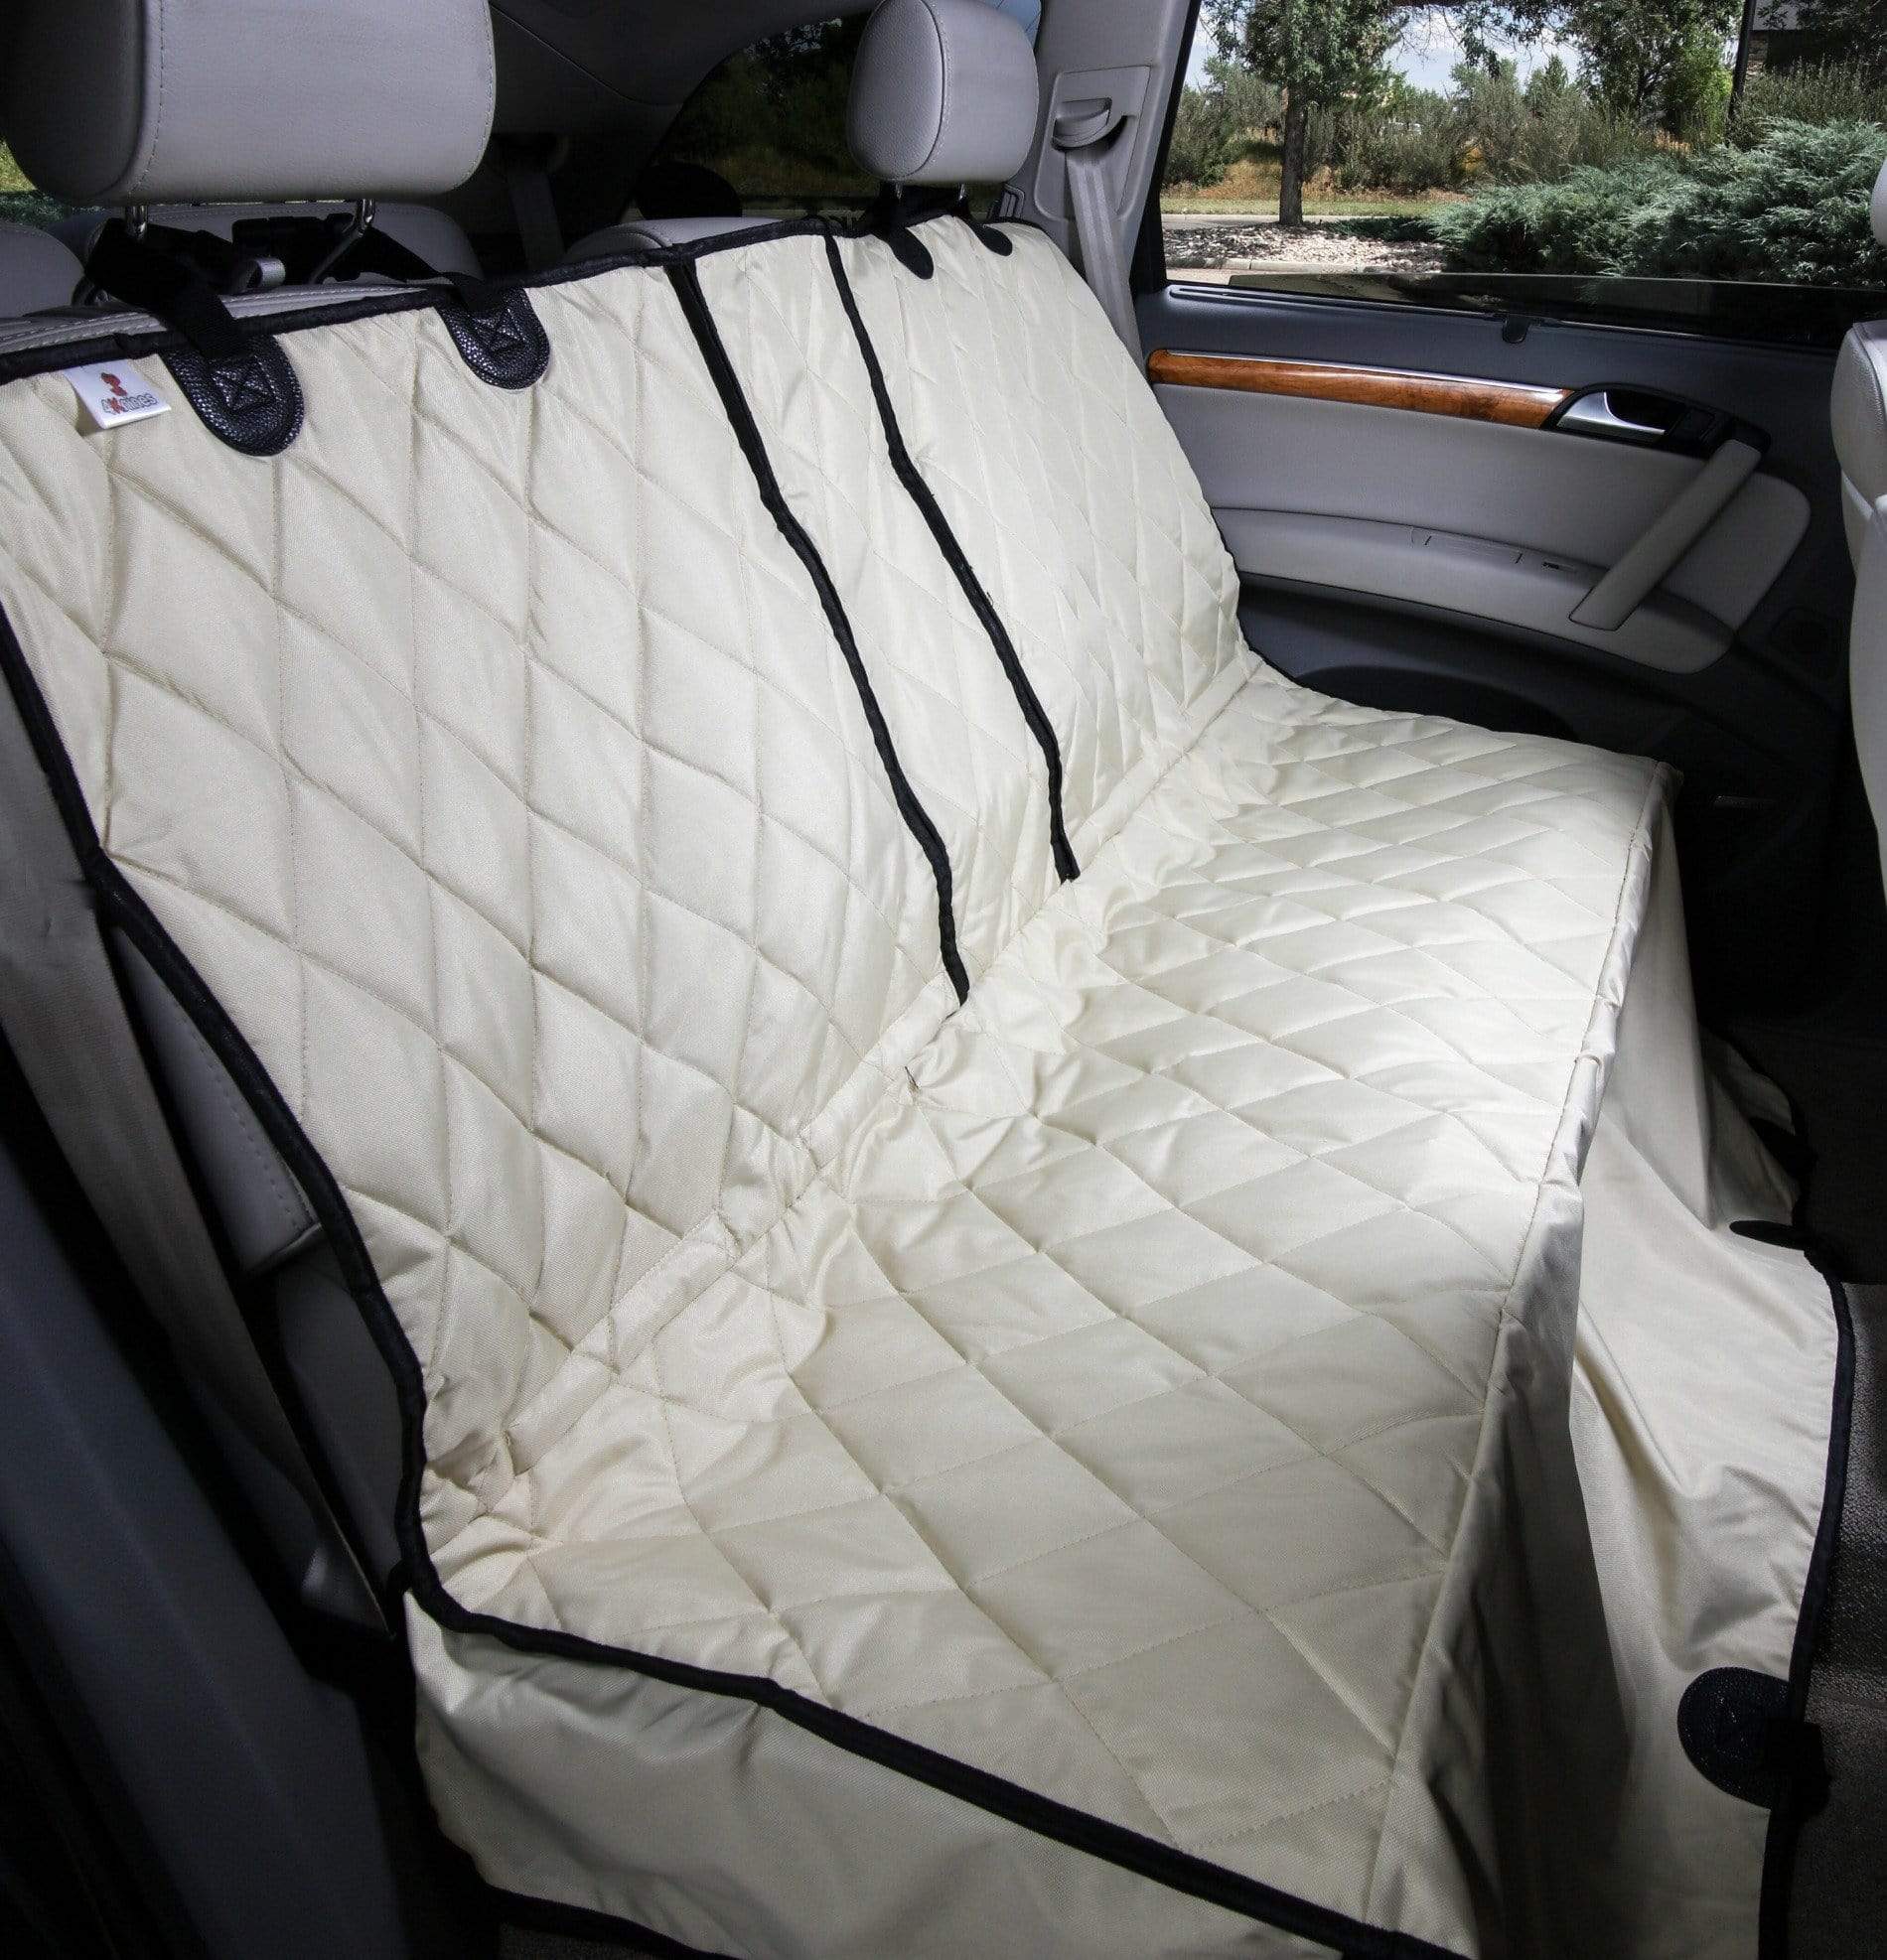 4Knines Split Rear Seat Cover with Hammock, Black, Regular